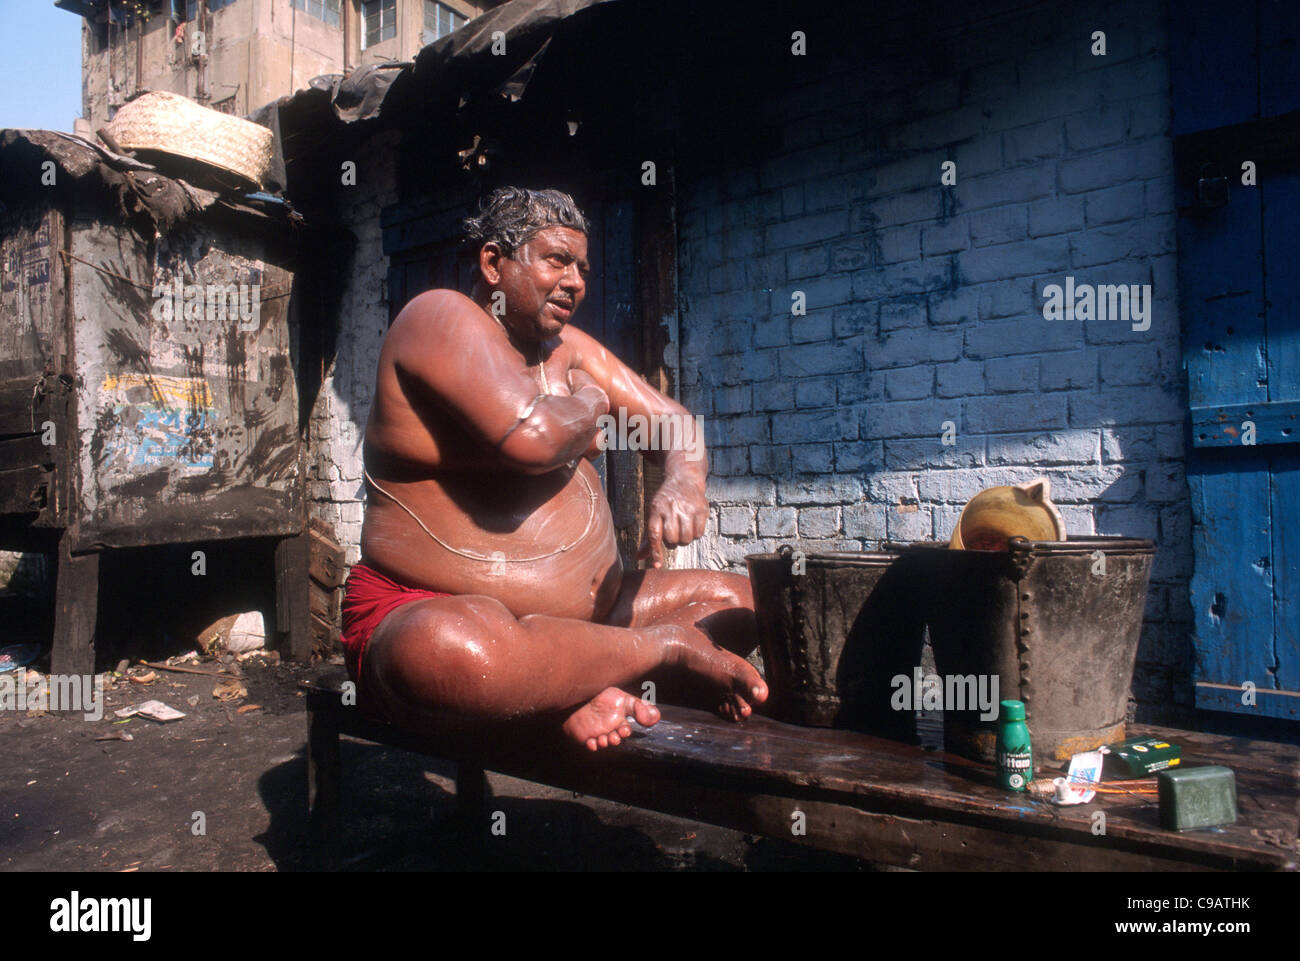 Man ashing. Slums of calcutta, India Stock Photo